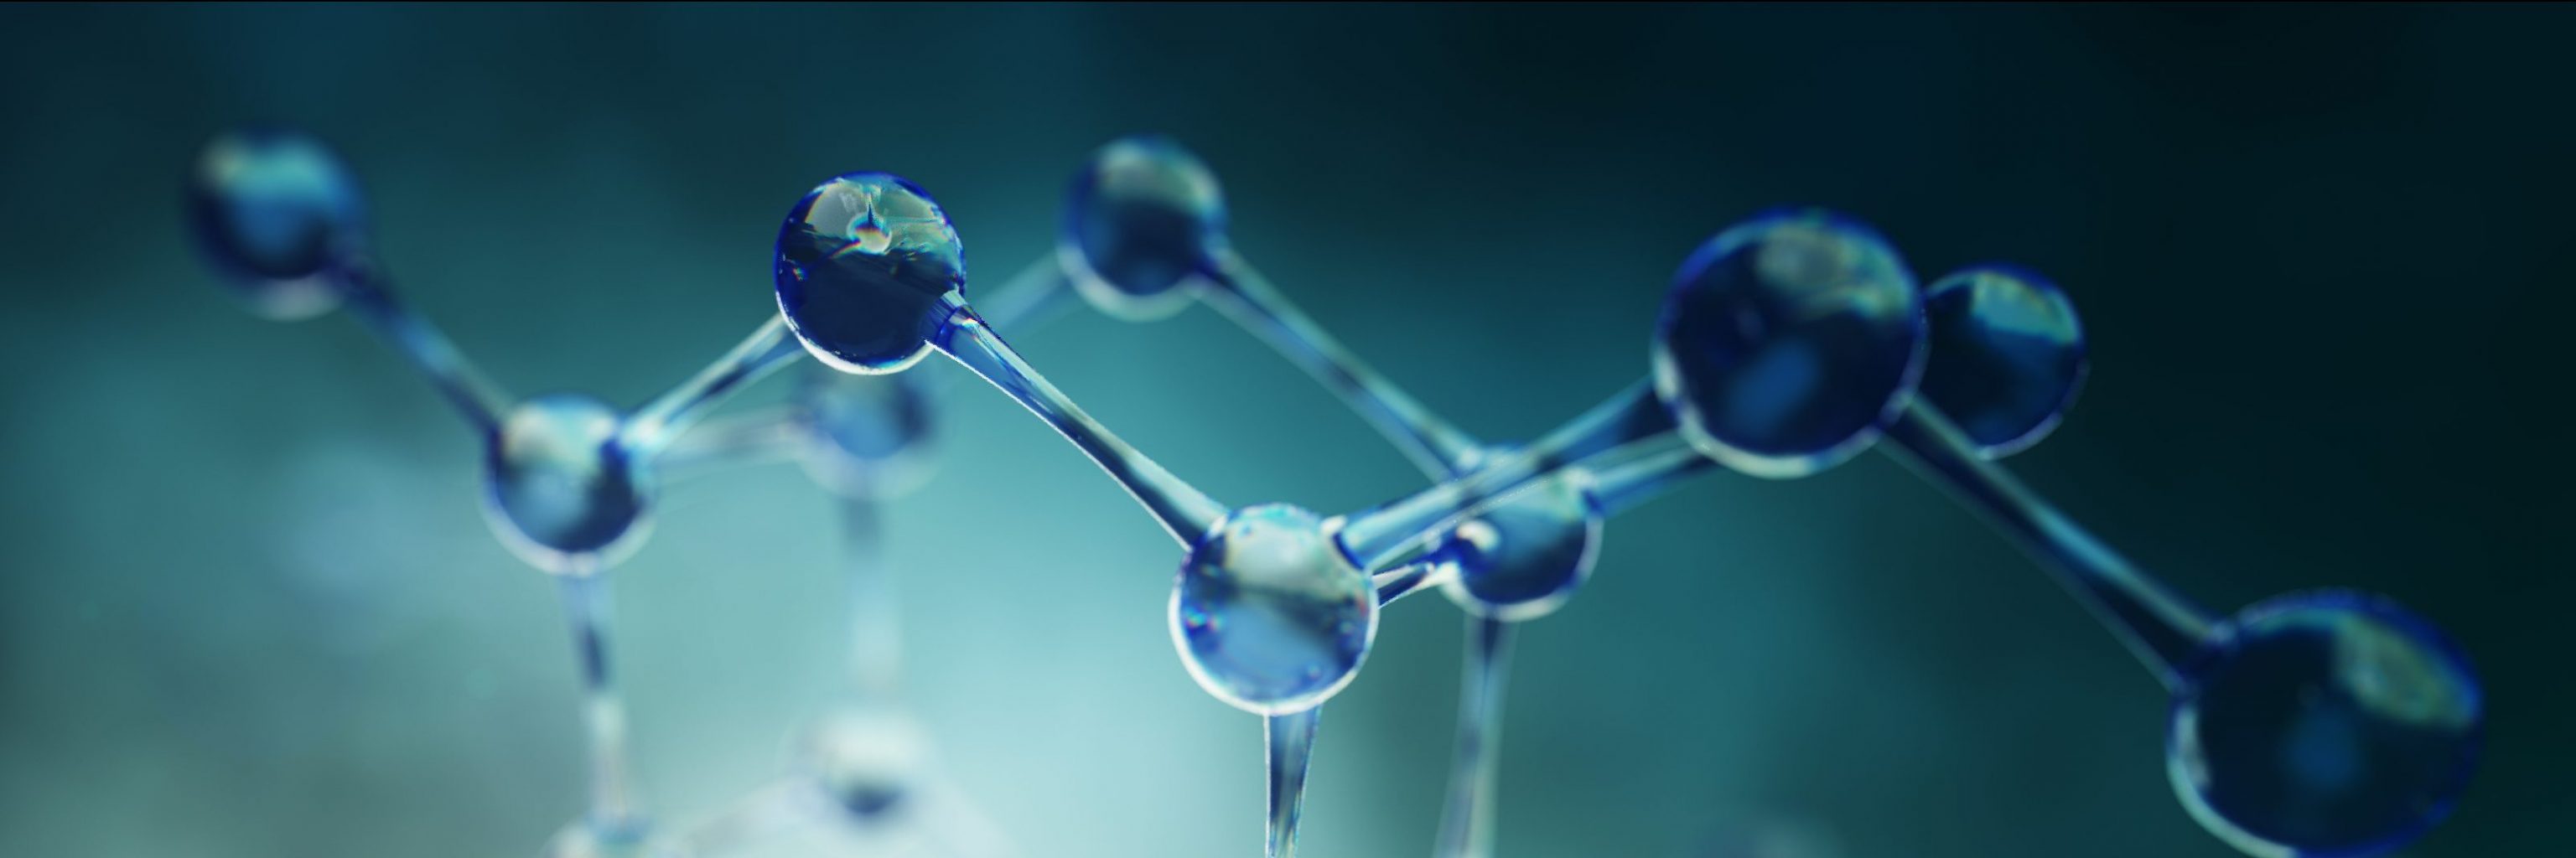 Structural Molecules close up